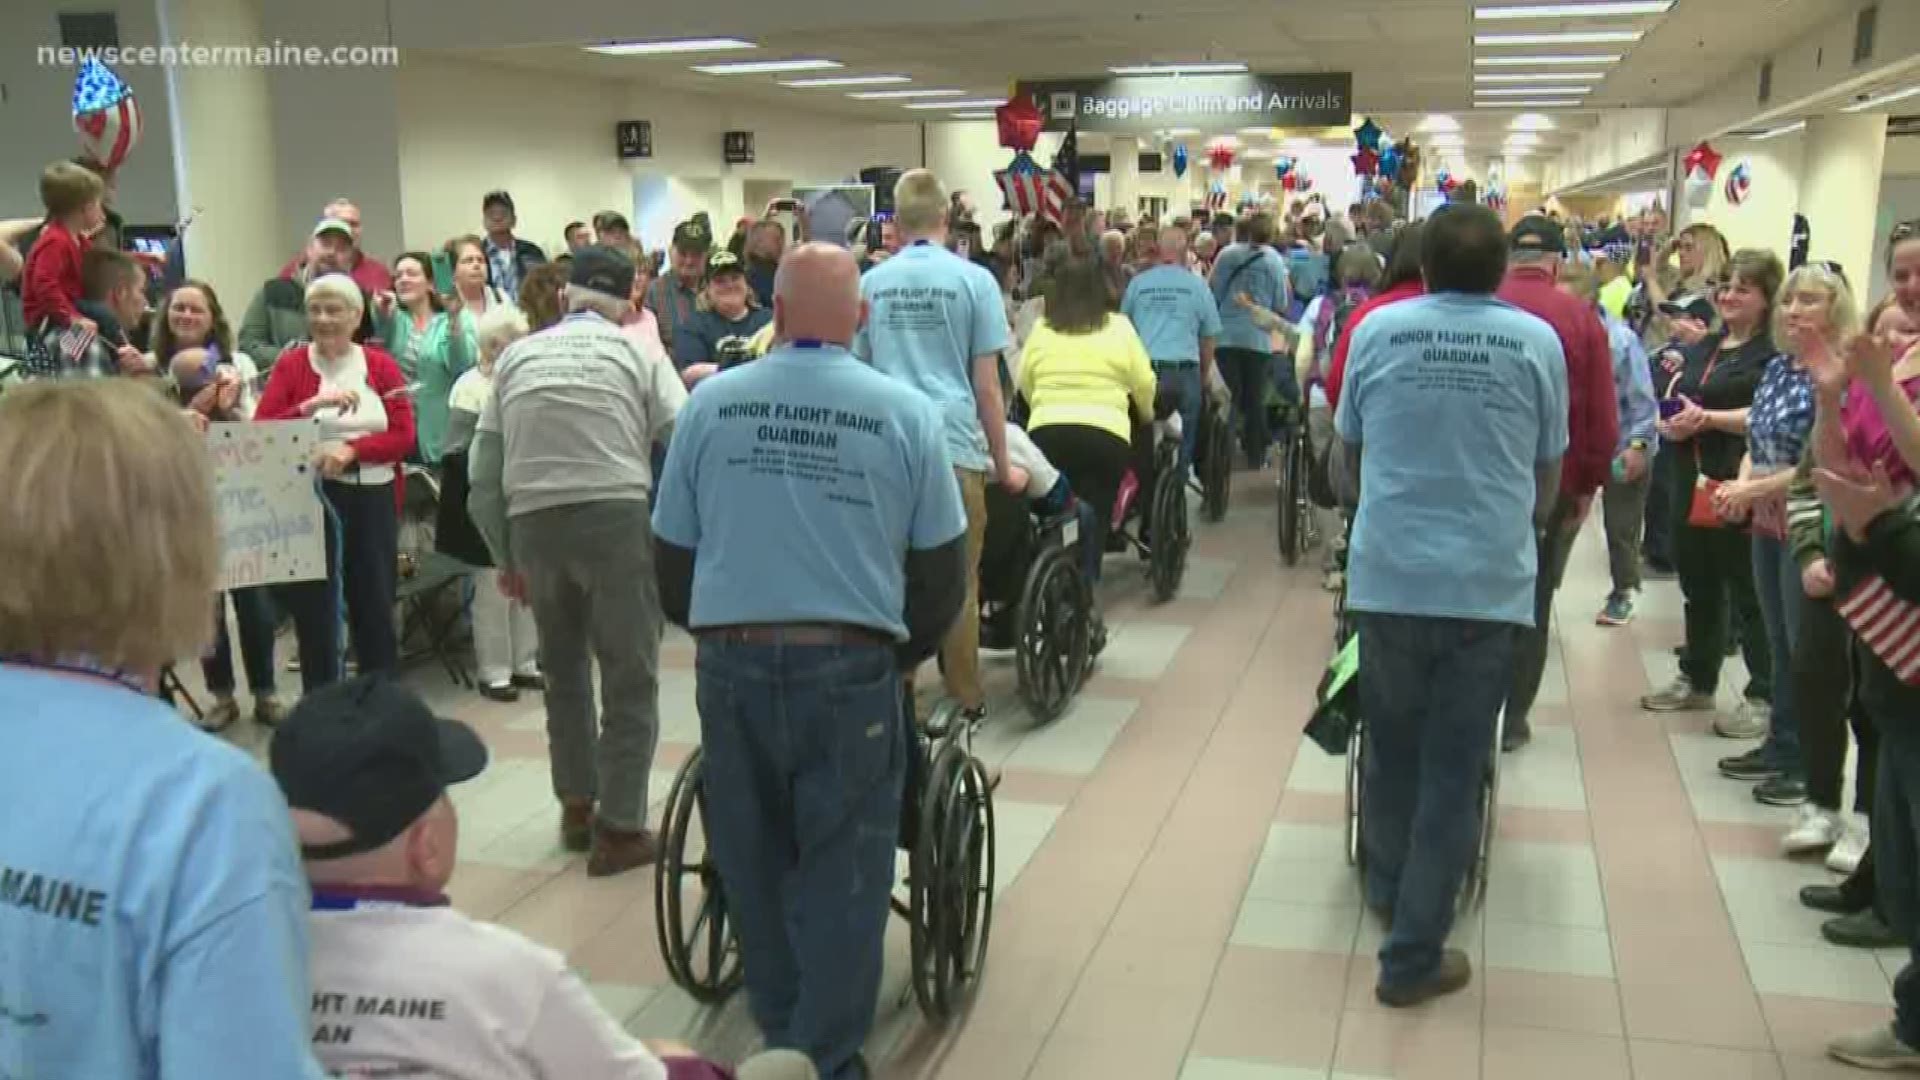 Veterans return home from Honor Flight Maine trip.